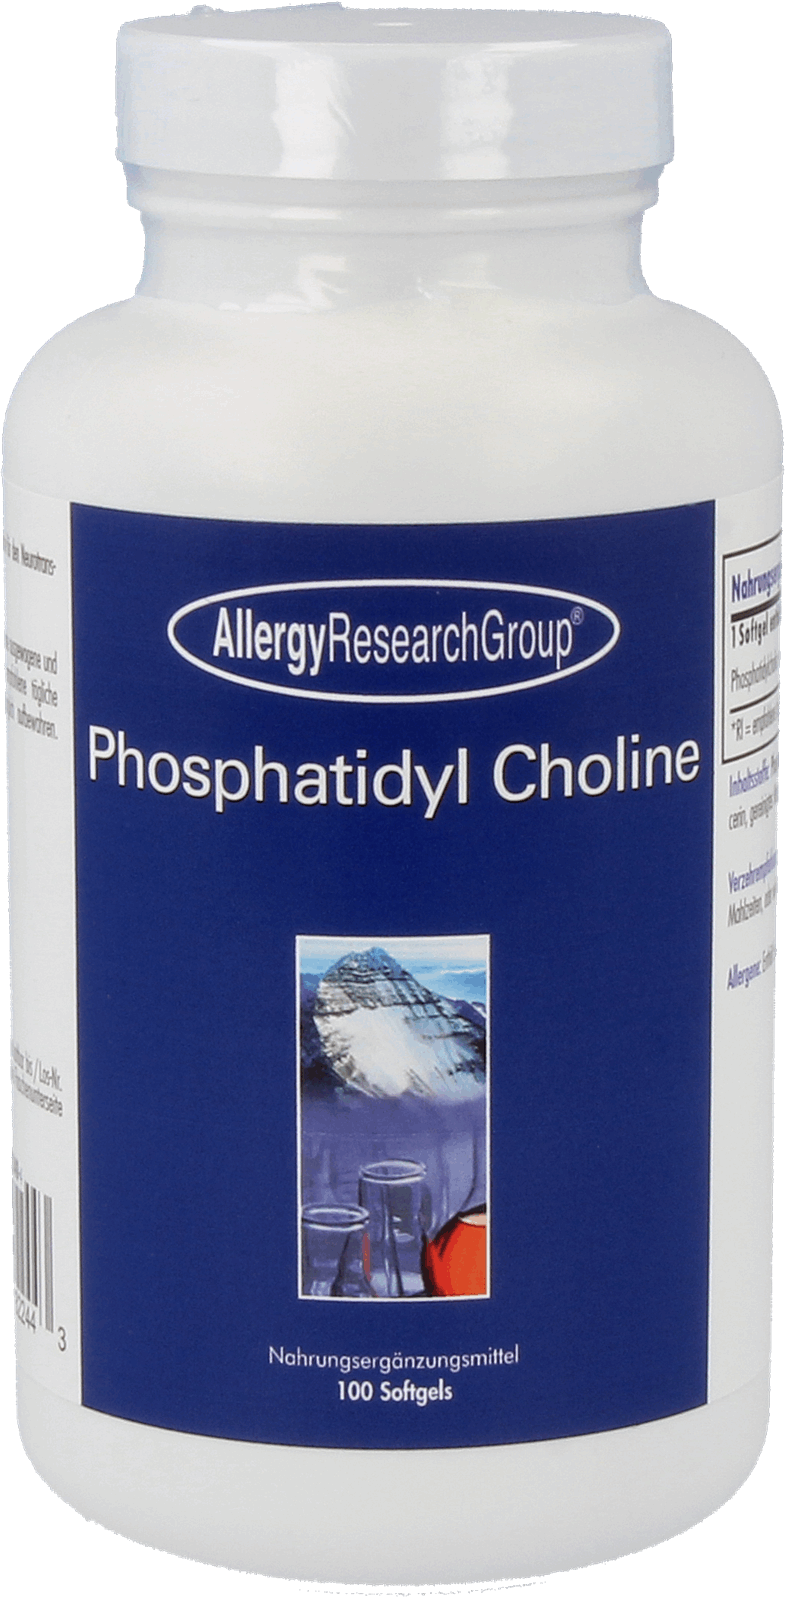 Allergy Research Group Phosphatidyl Choline 100 Softgels - 